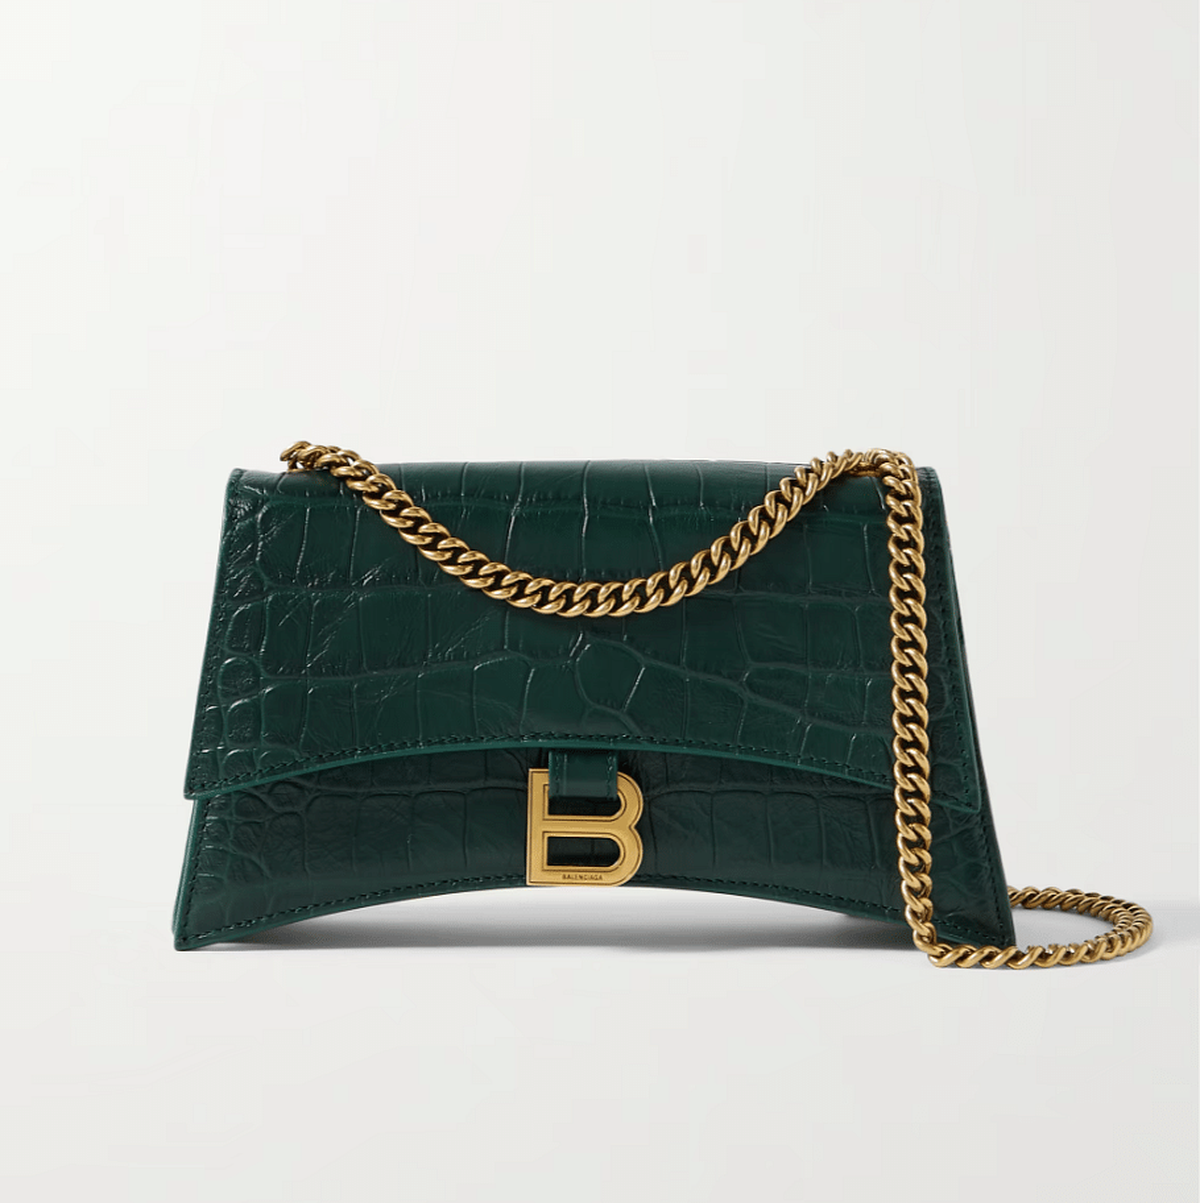 Victoria Beckham Chain Pouch crocodile-effect clutch bag - Green